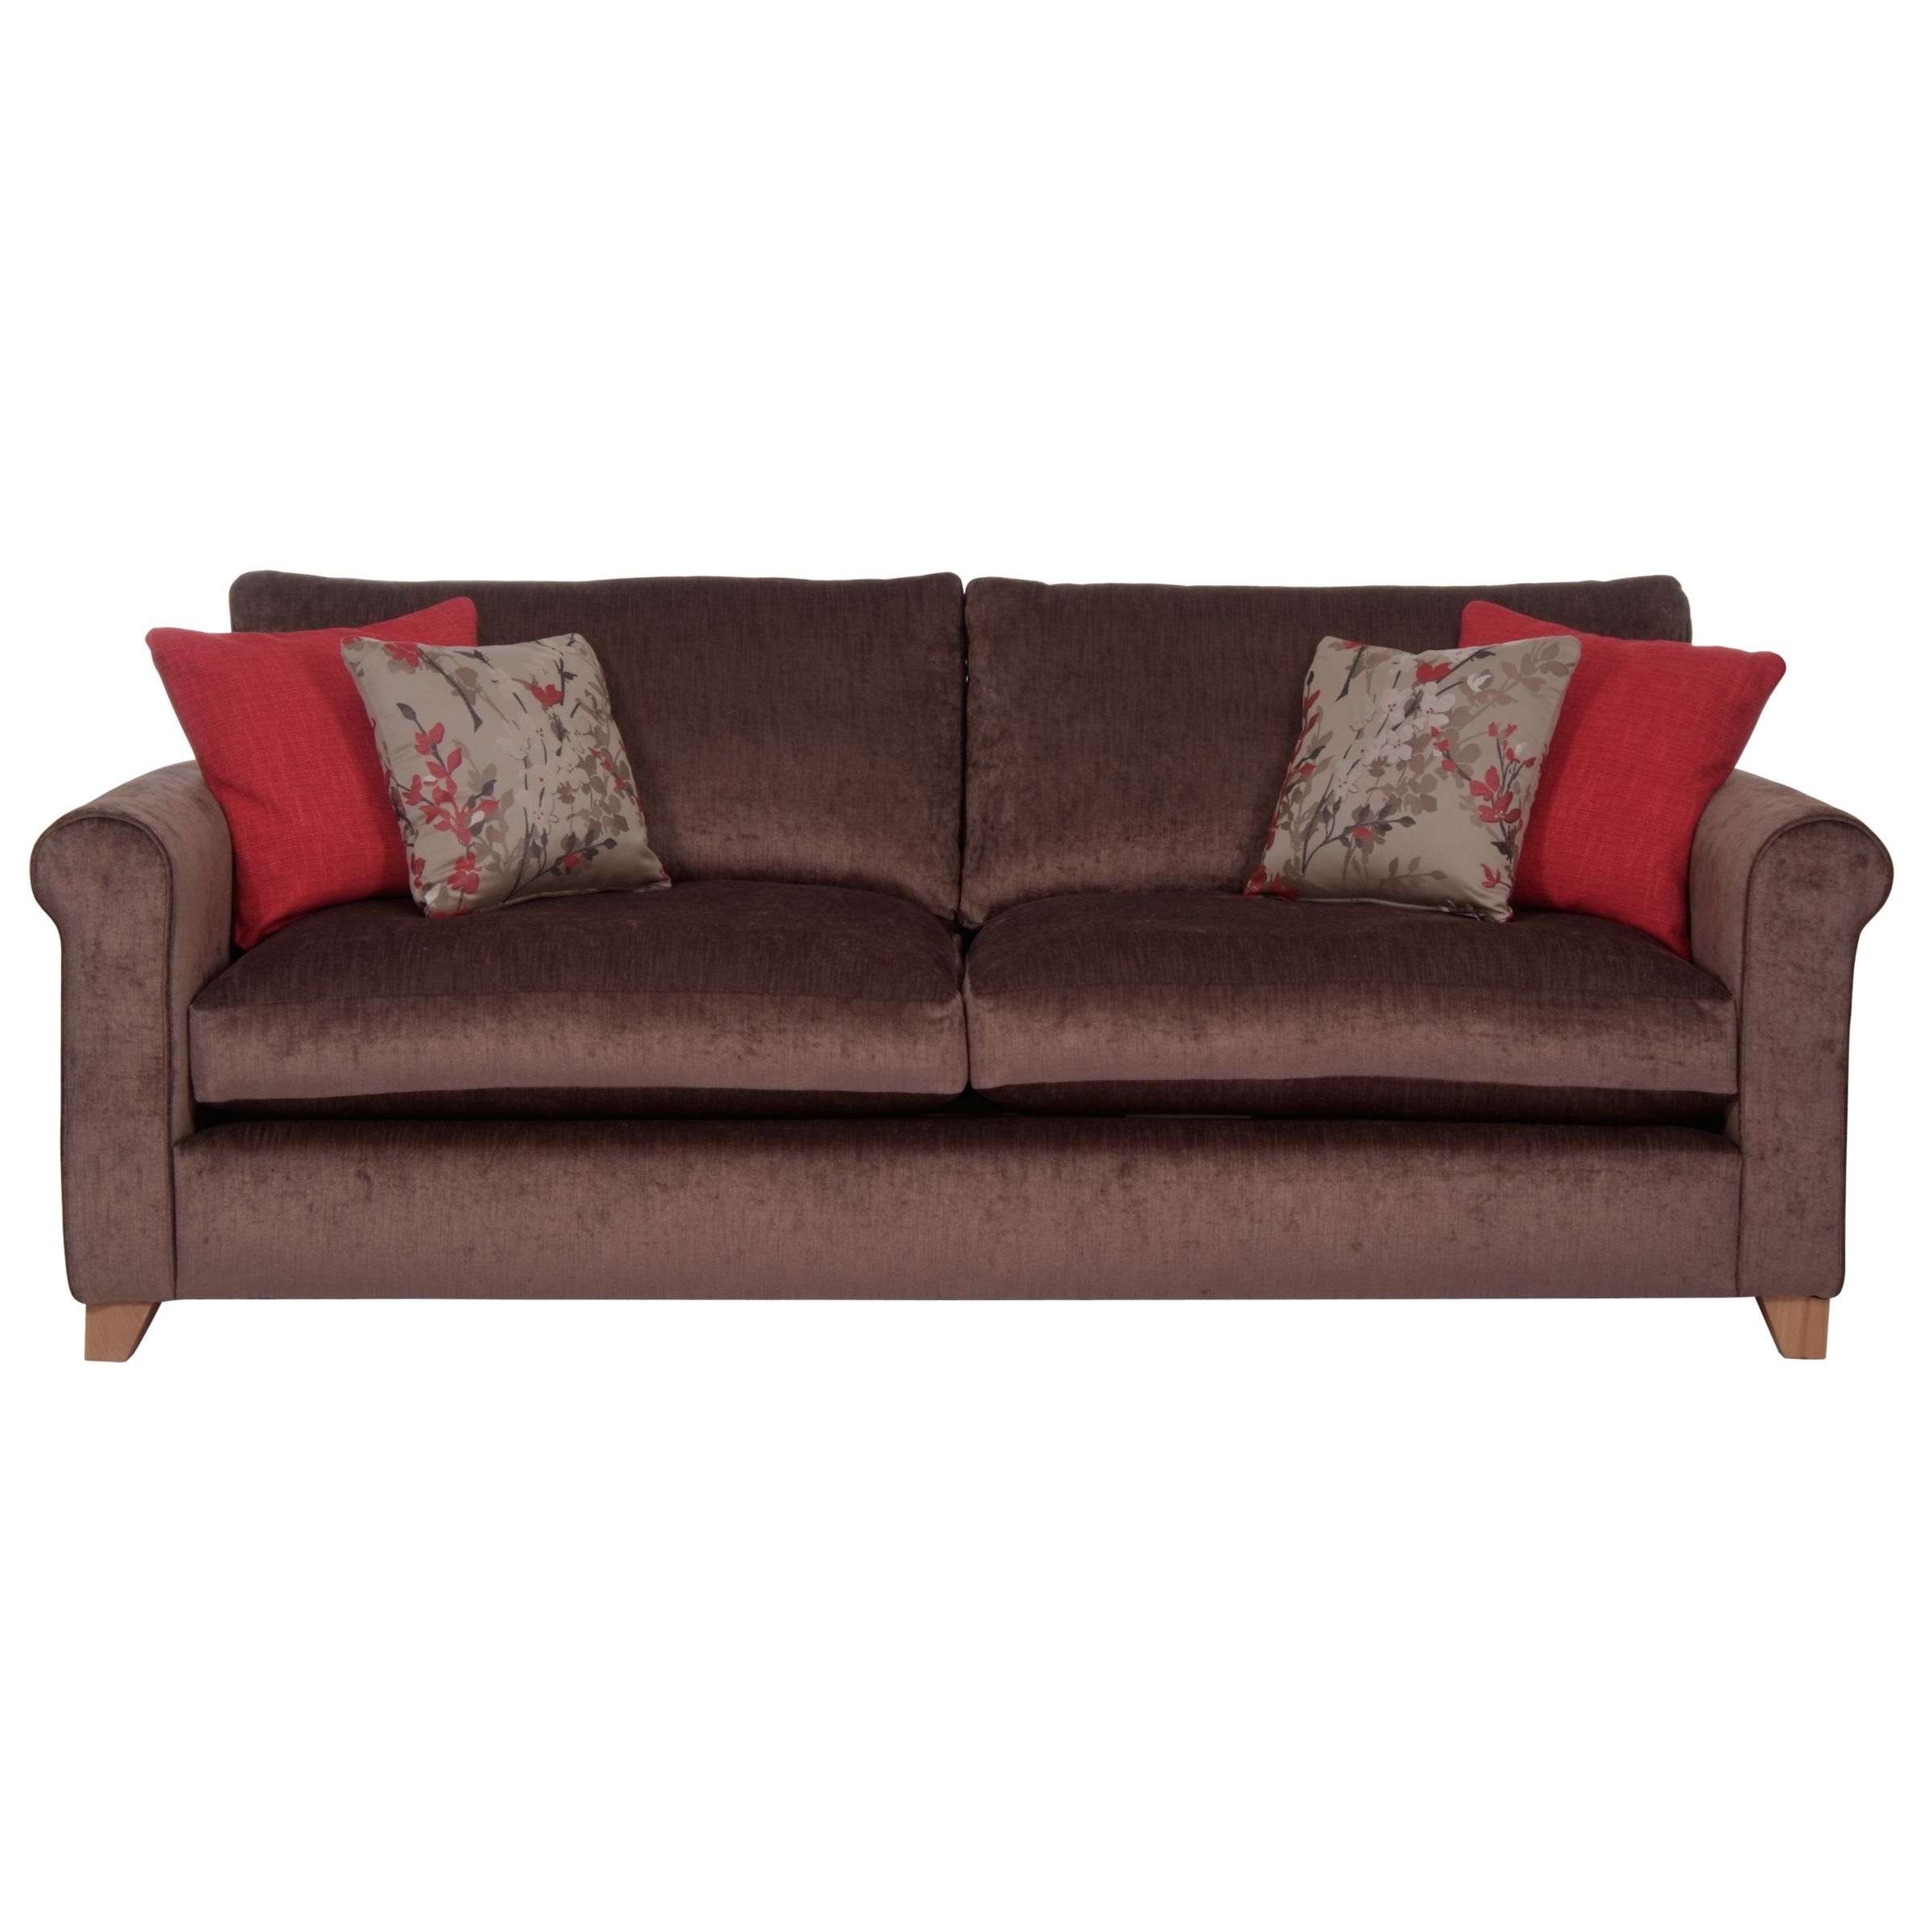 John Lewis Options Grand Sofa, Model 10, Lawrence Toffee at John Lewis